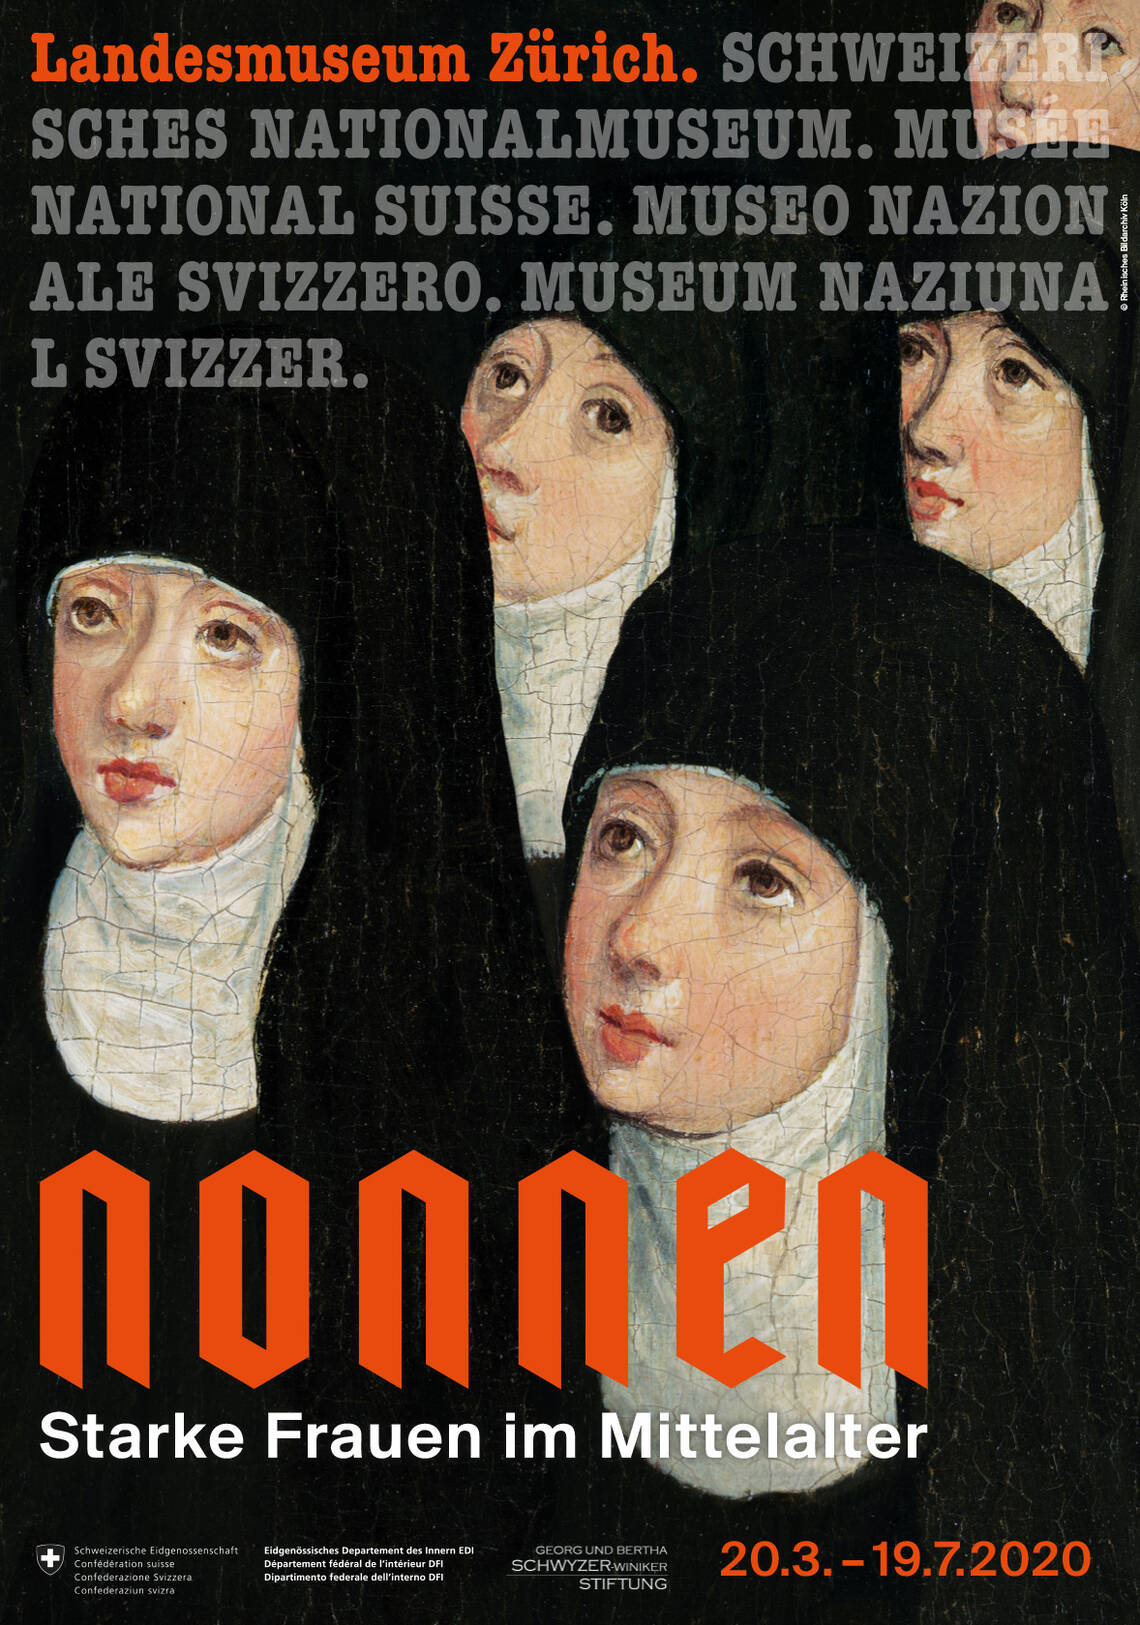 Plakat der Ausstellung "Nonnen im Mittelalter"